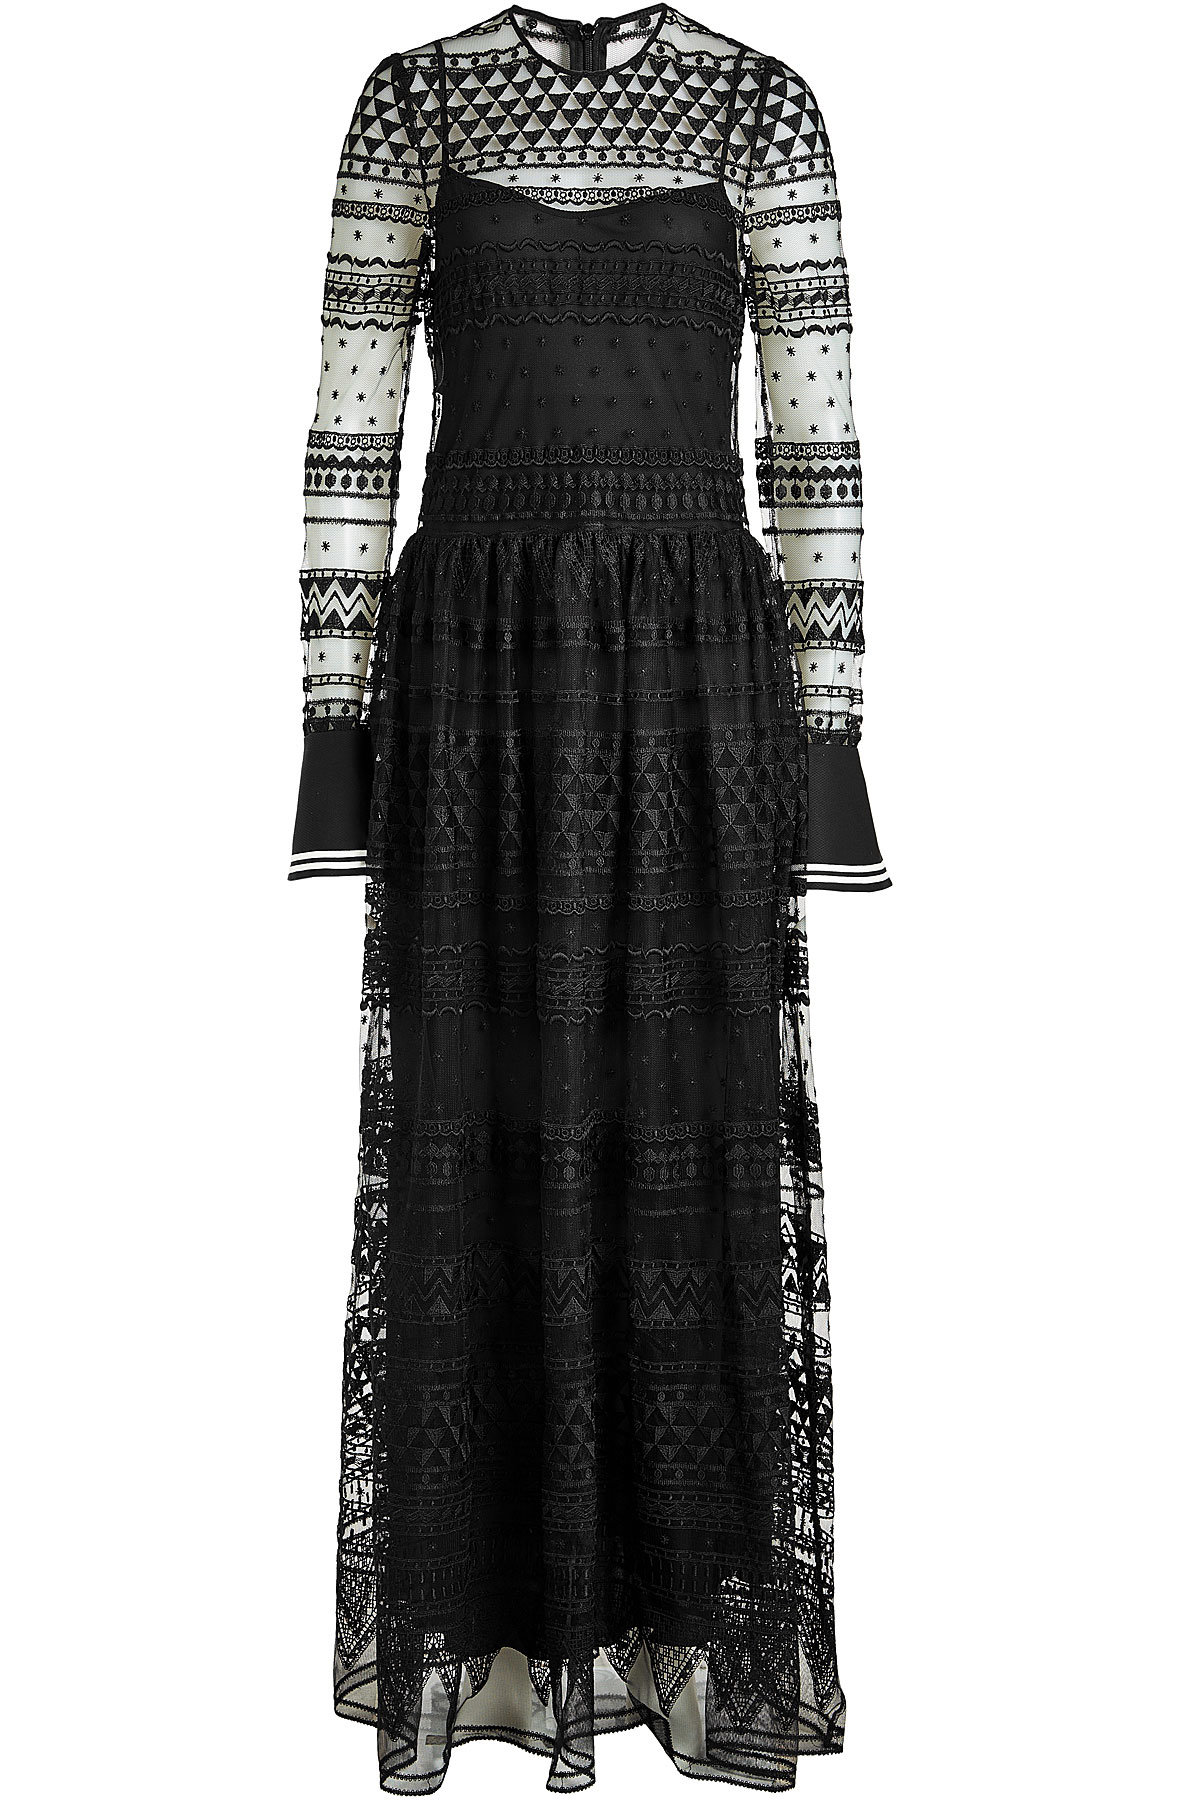 Philosophy di Lorenzo Serafini - Floor Length Dress with Lace